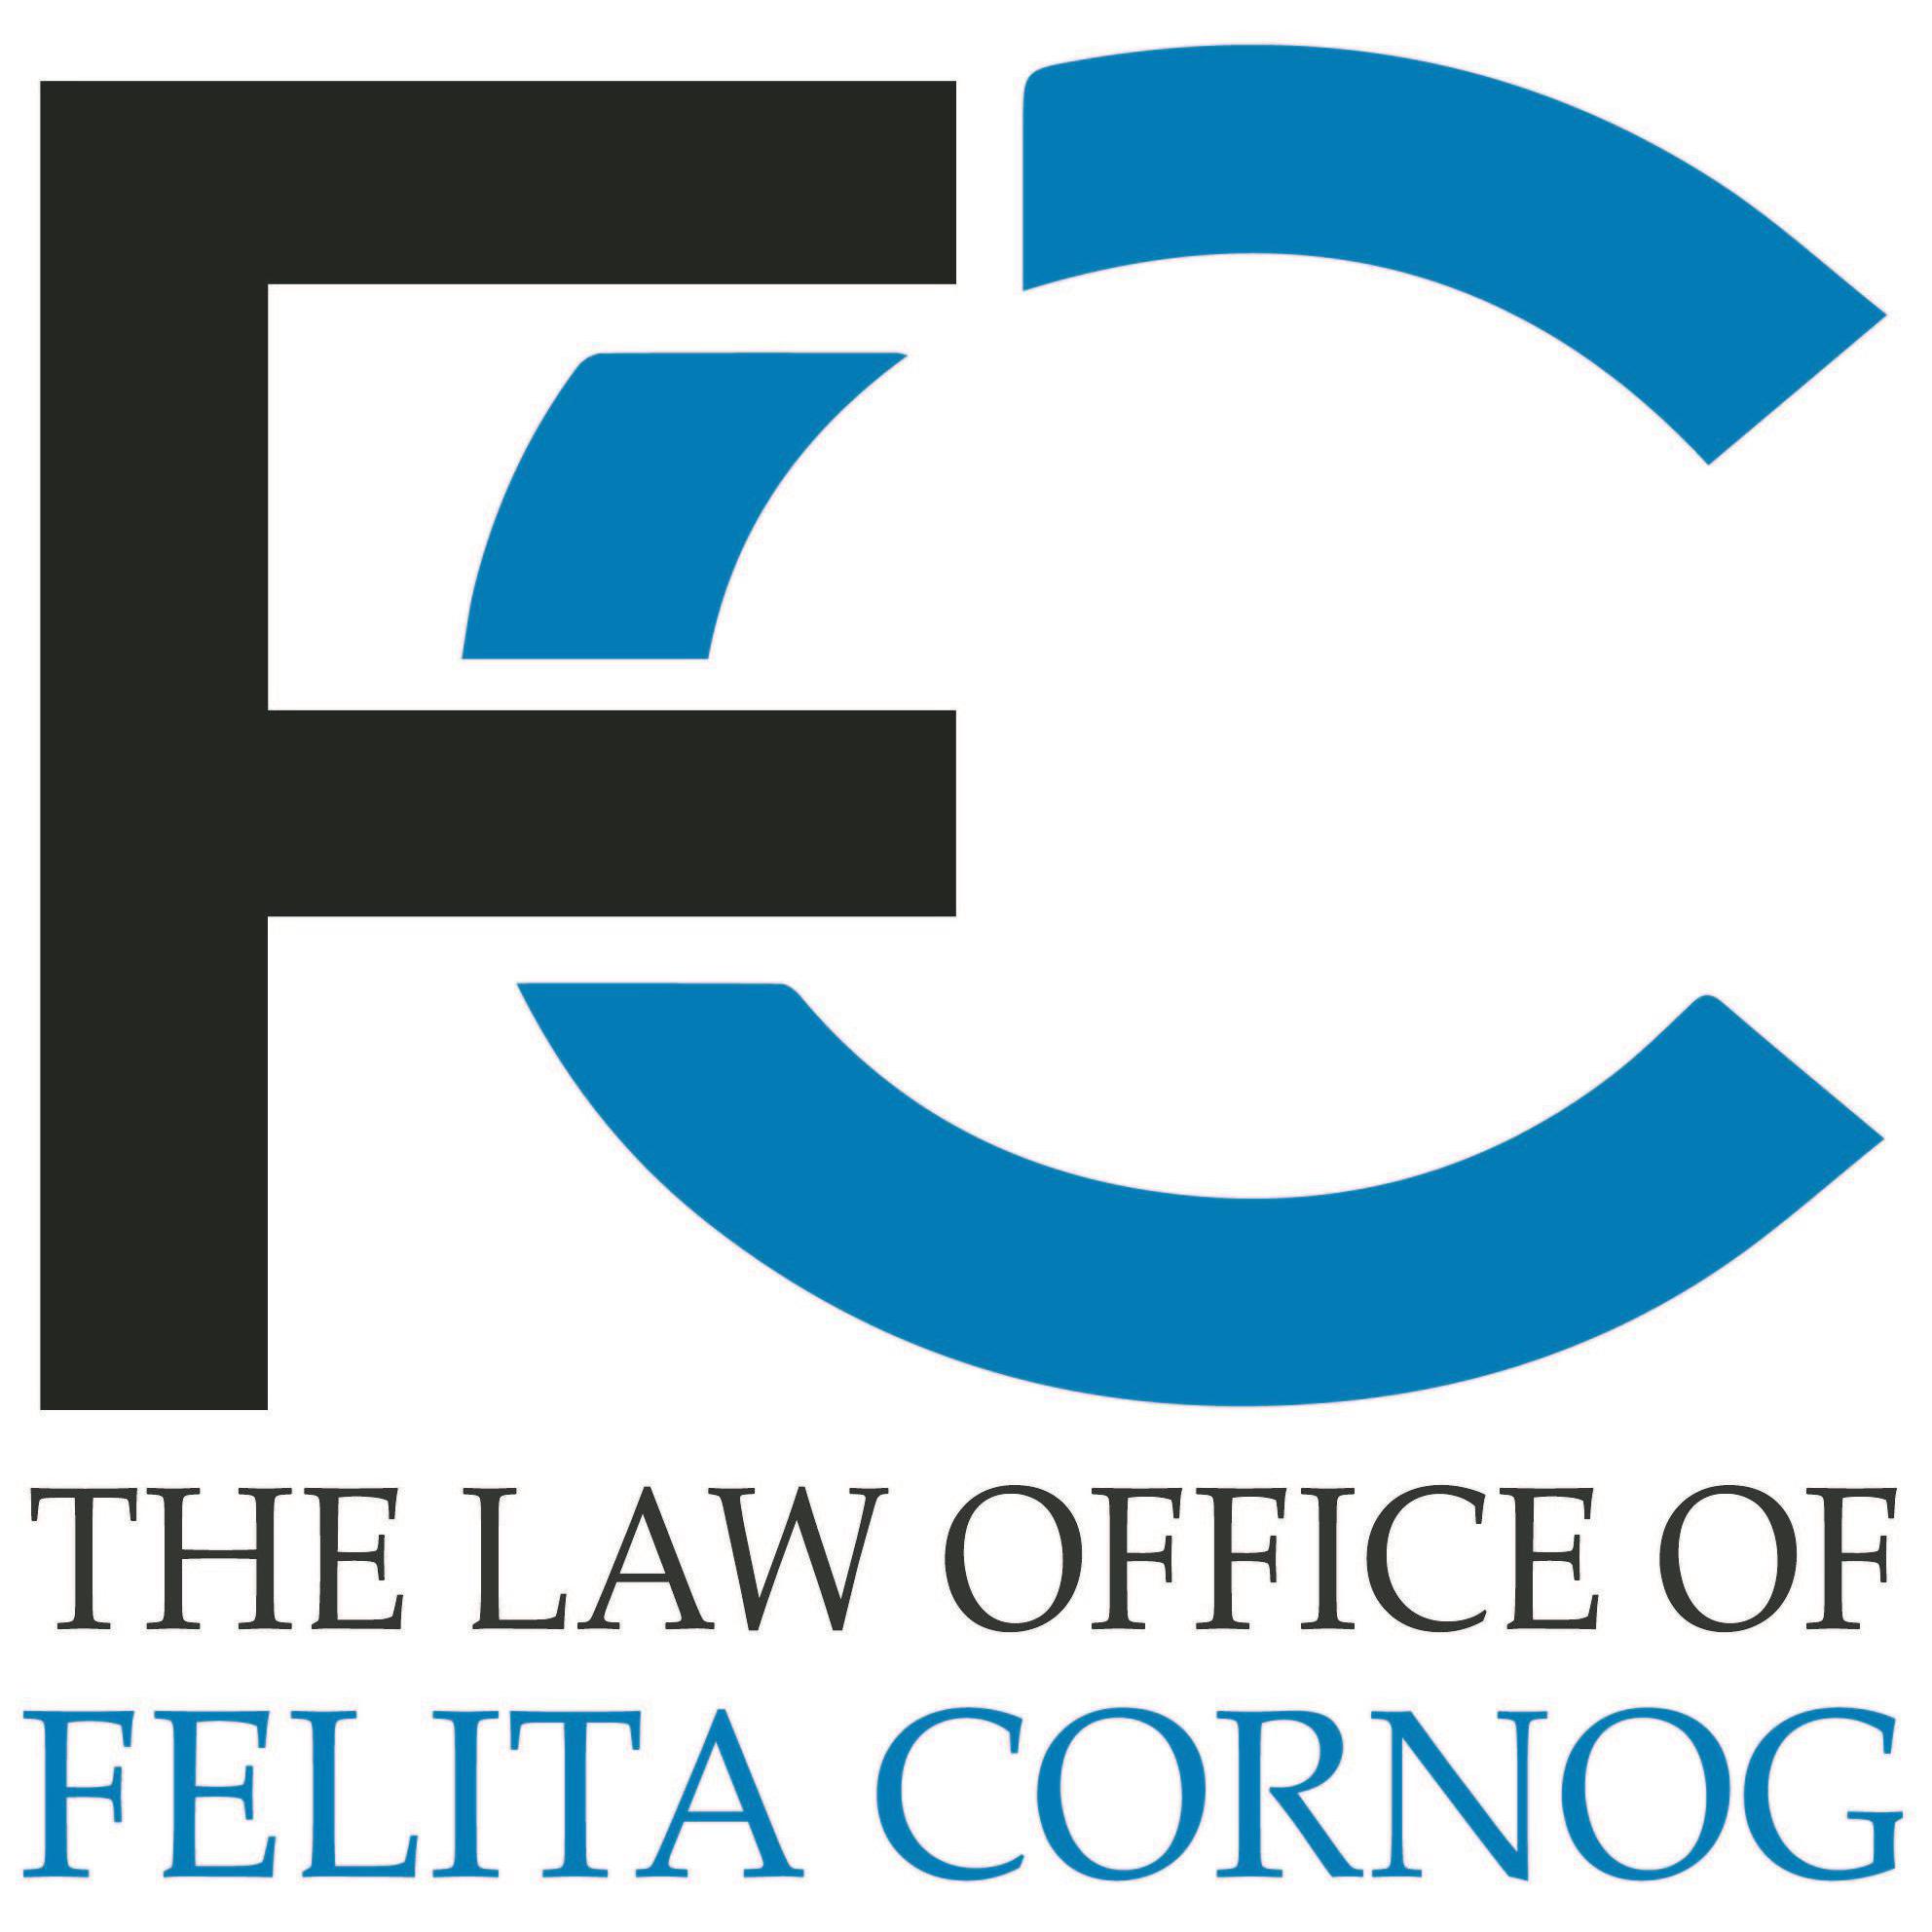 THE LAW OFFICE OF FELITA CORNOG